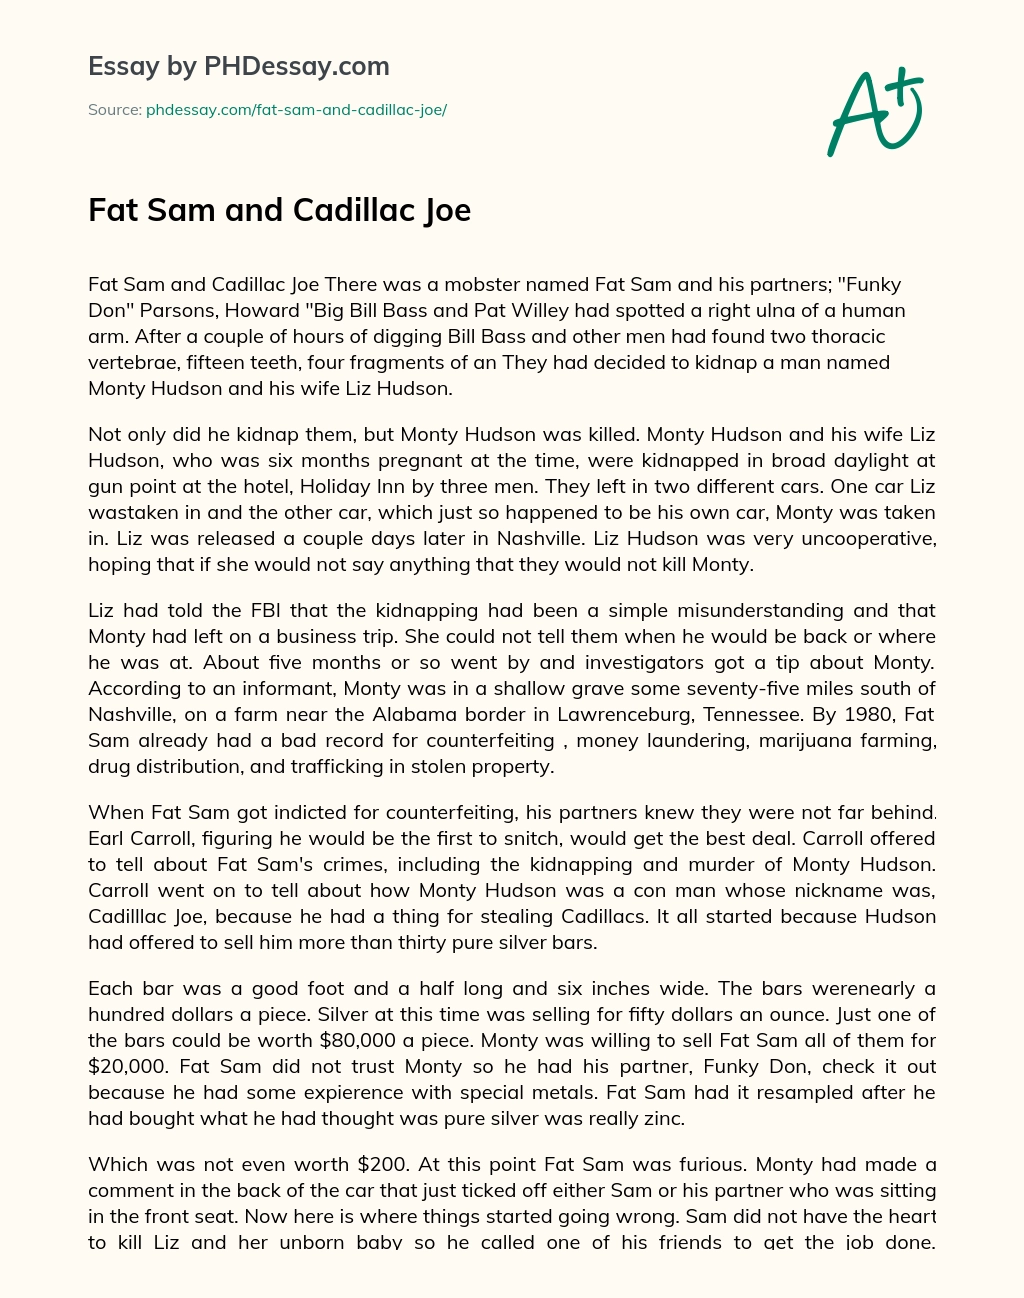 Fat Sam and Cadillac Joe essay